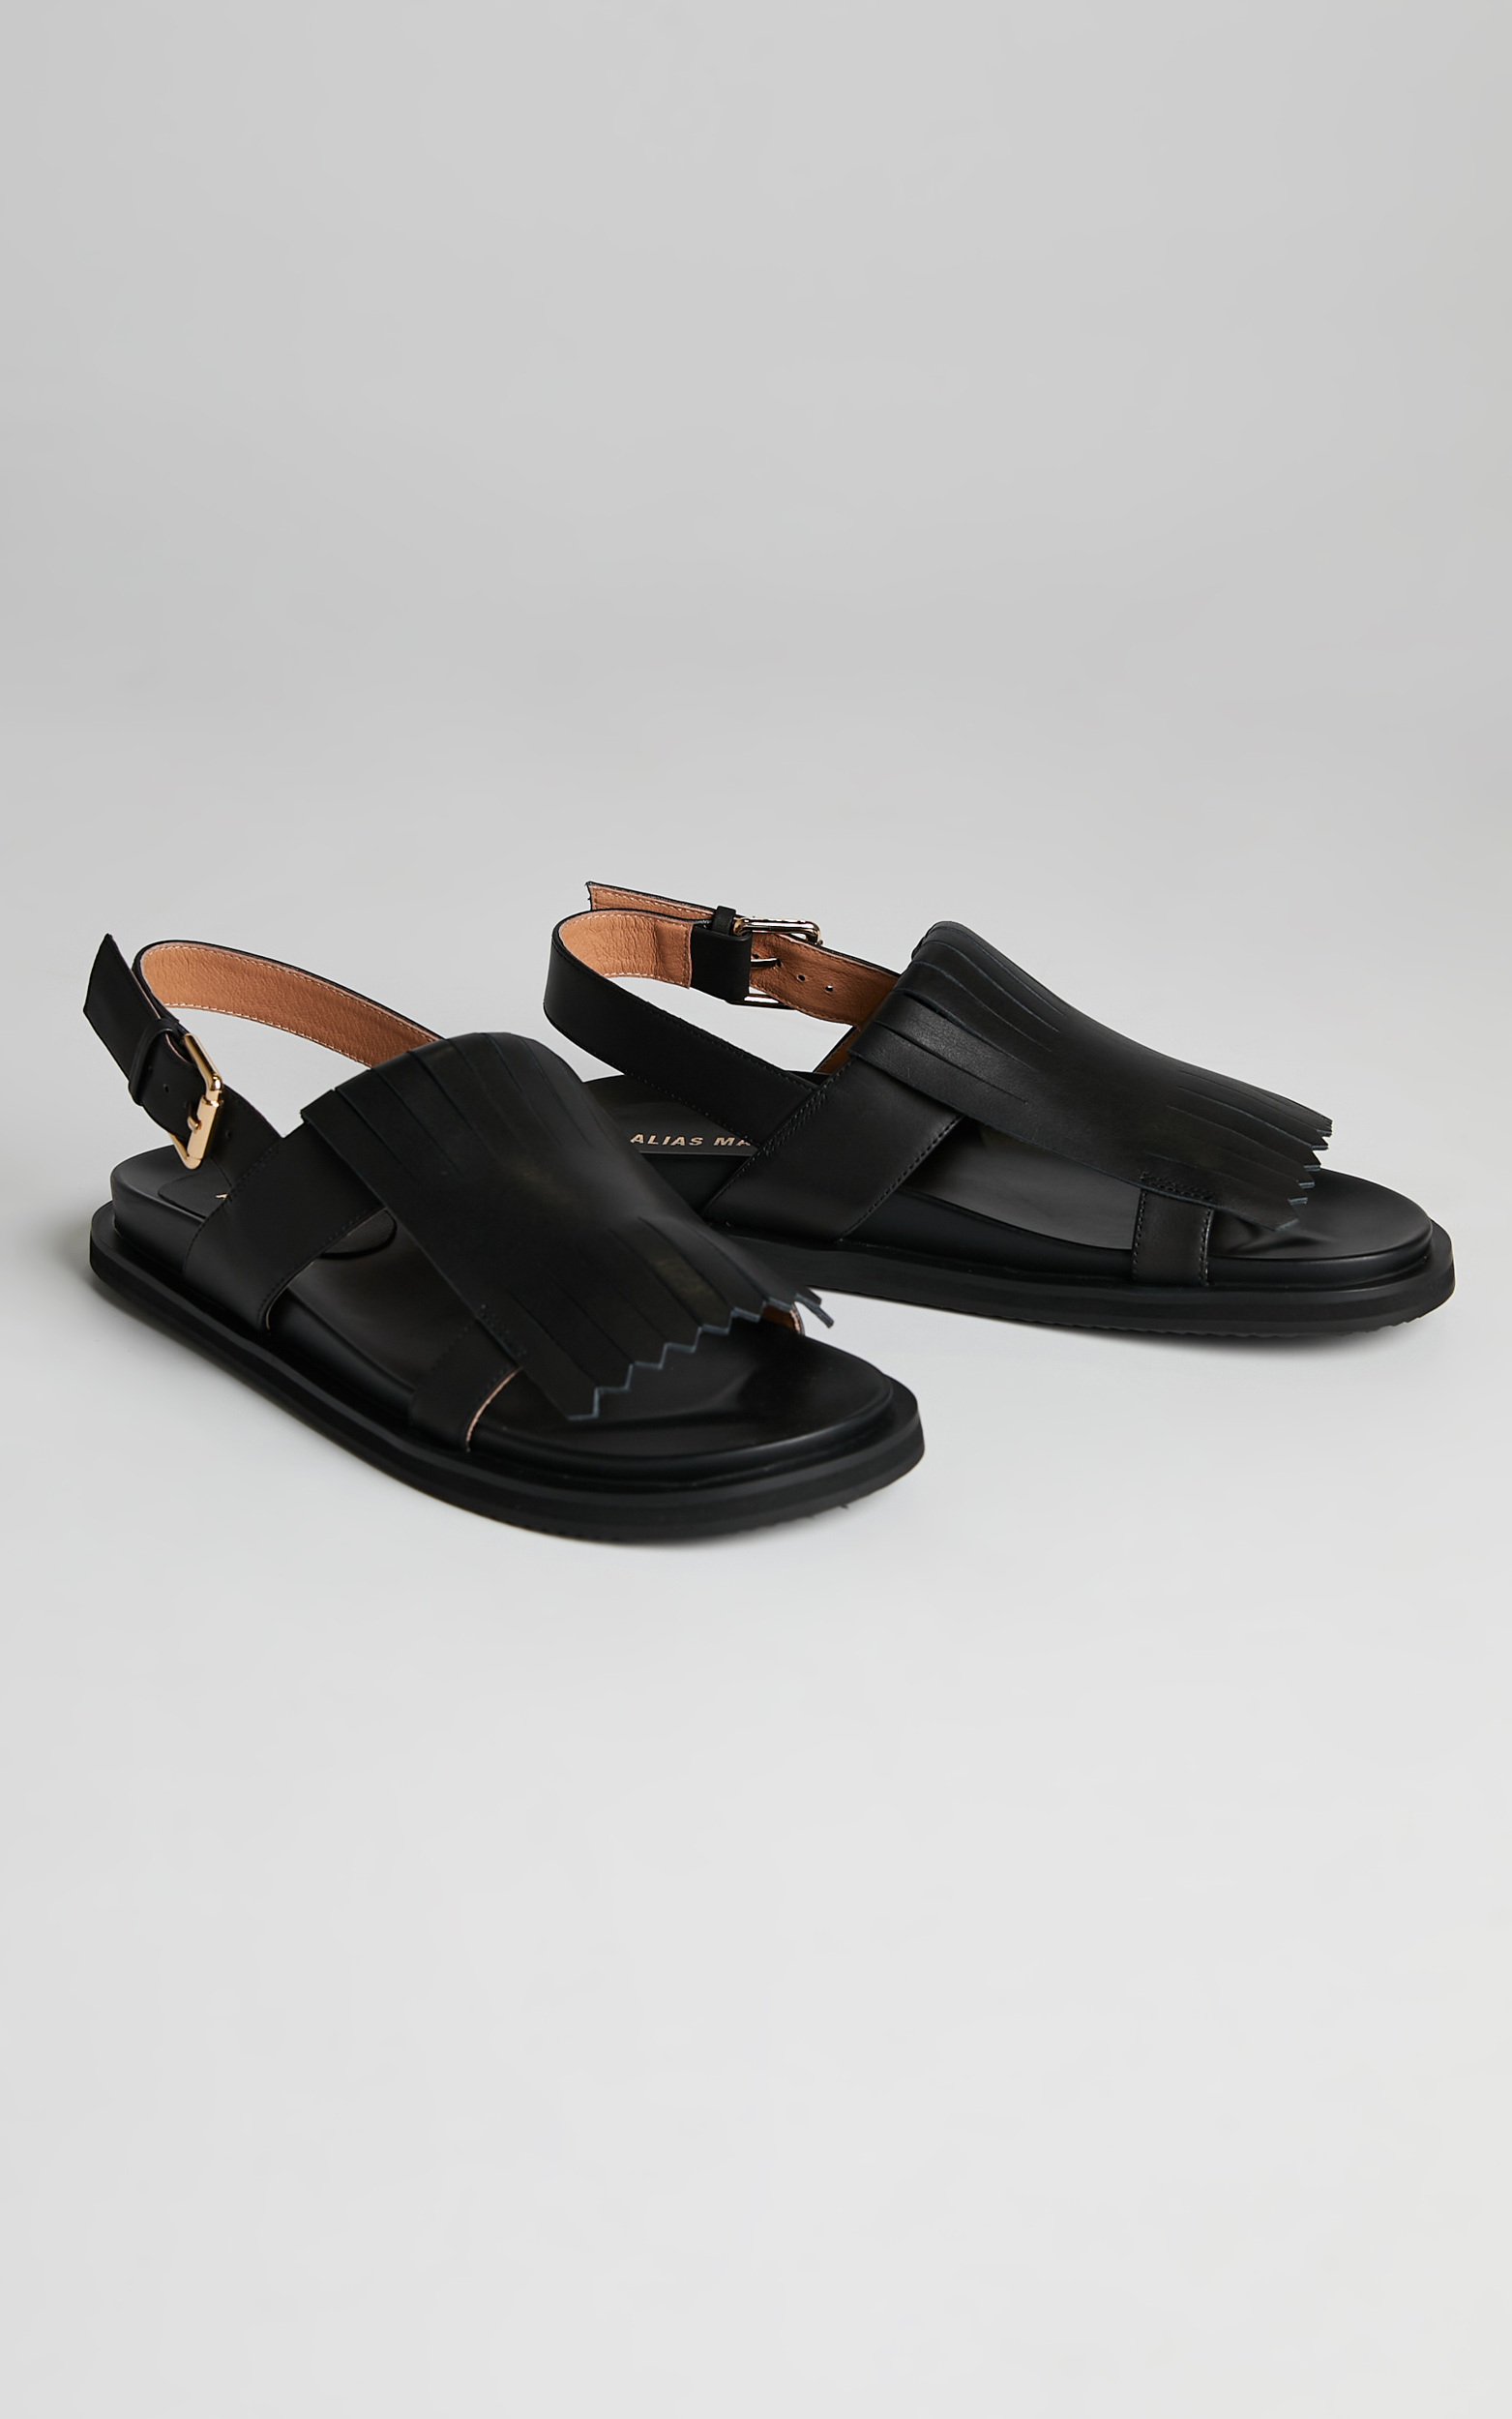 Alias Mae - Payton Sandals in Black Burnished - 10.5, BLK1, hi-res image number null